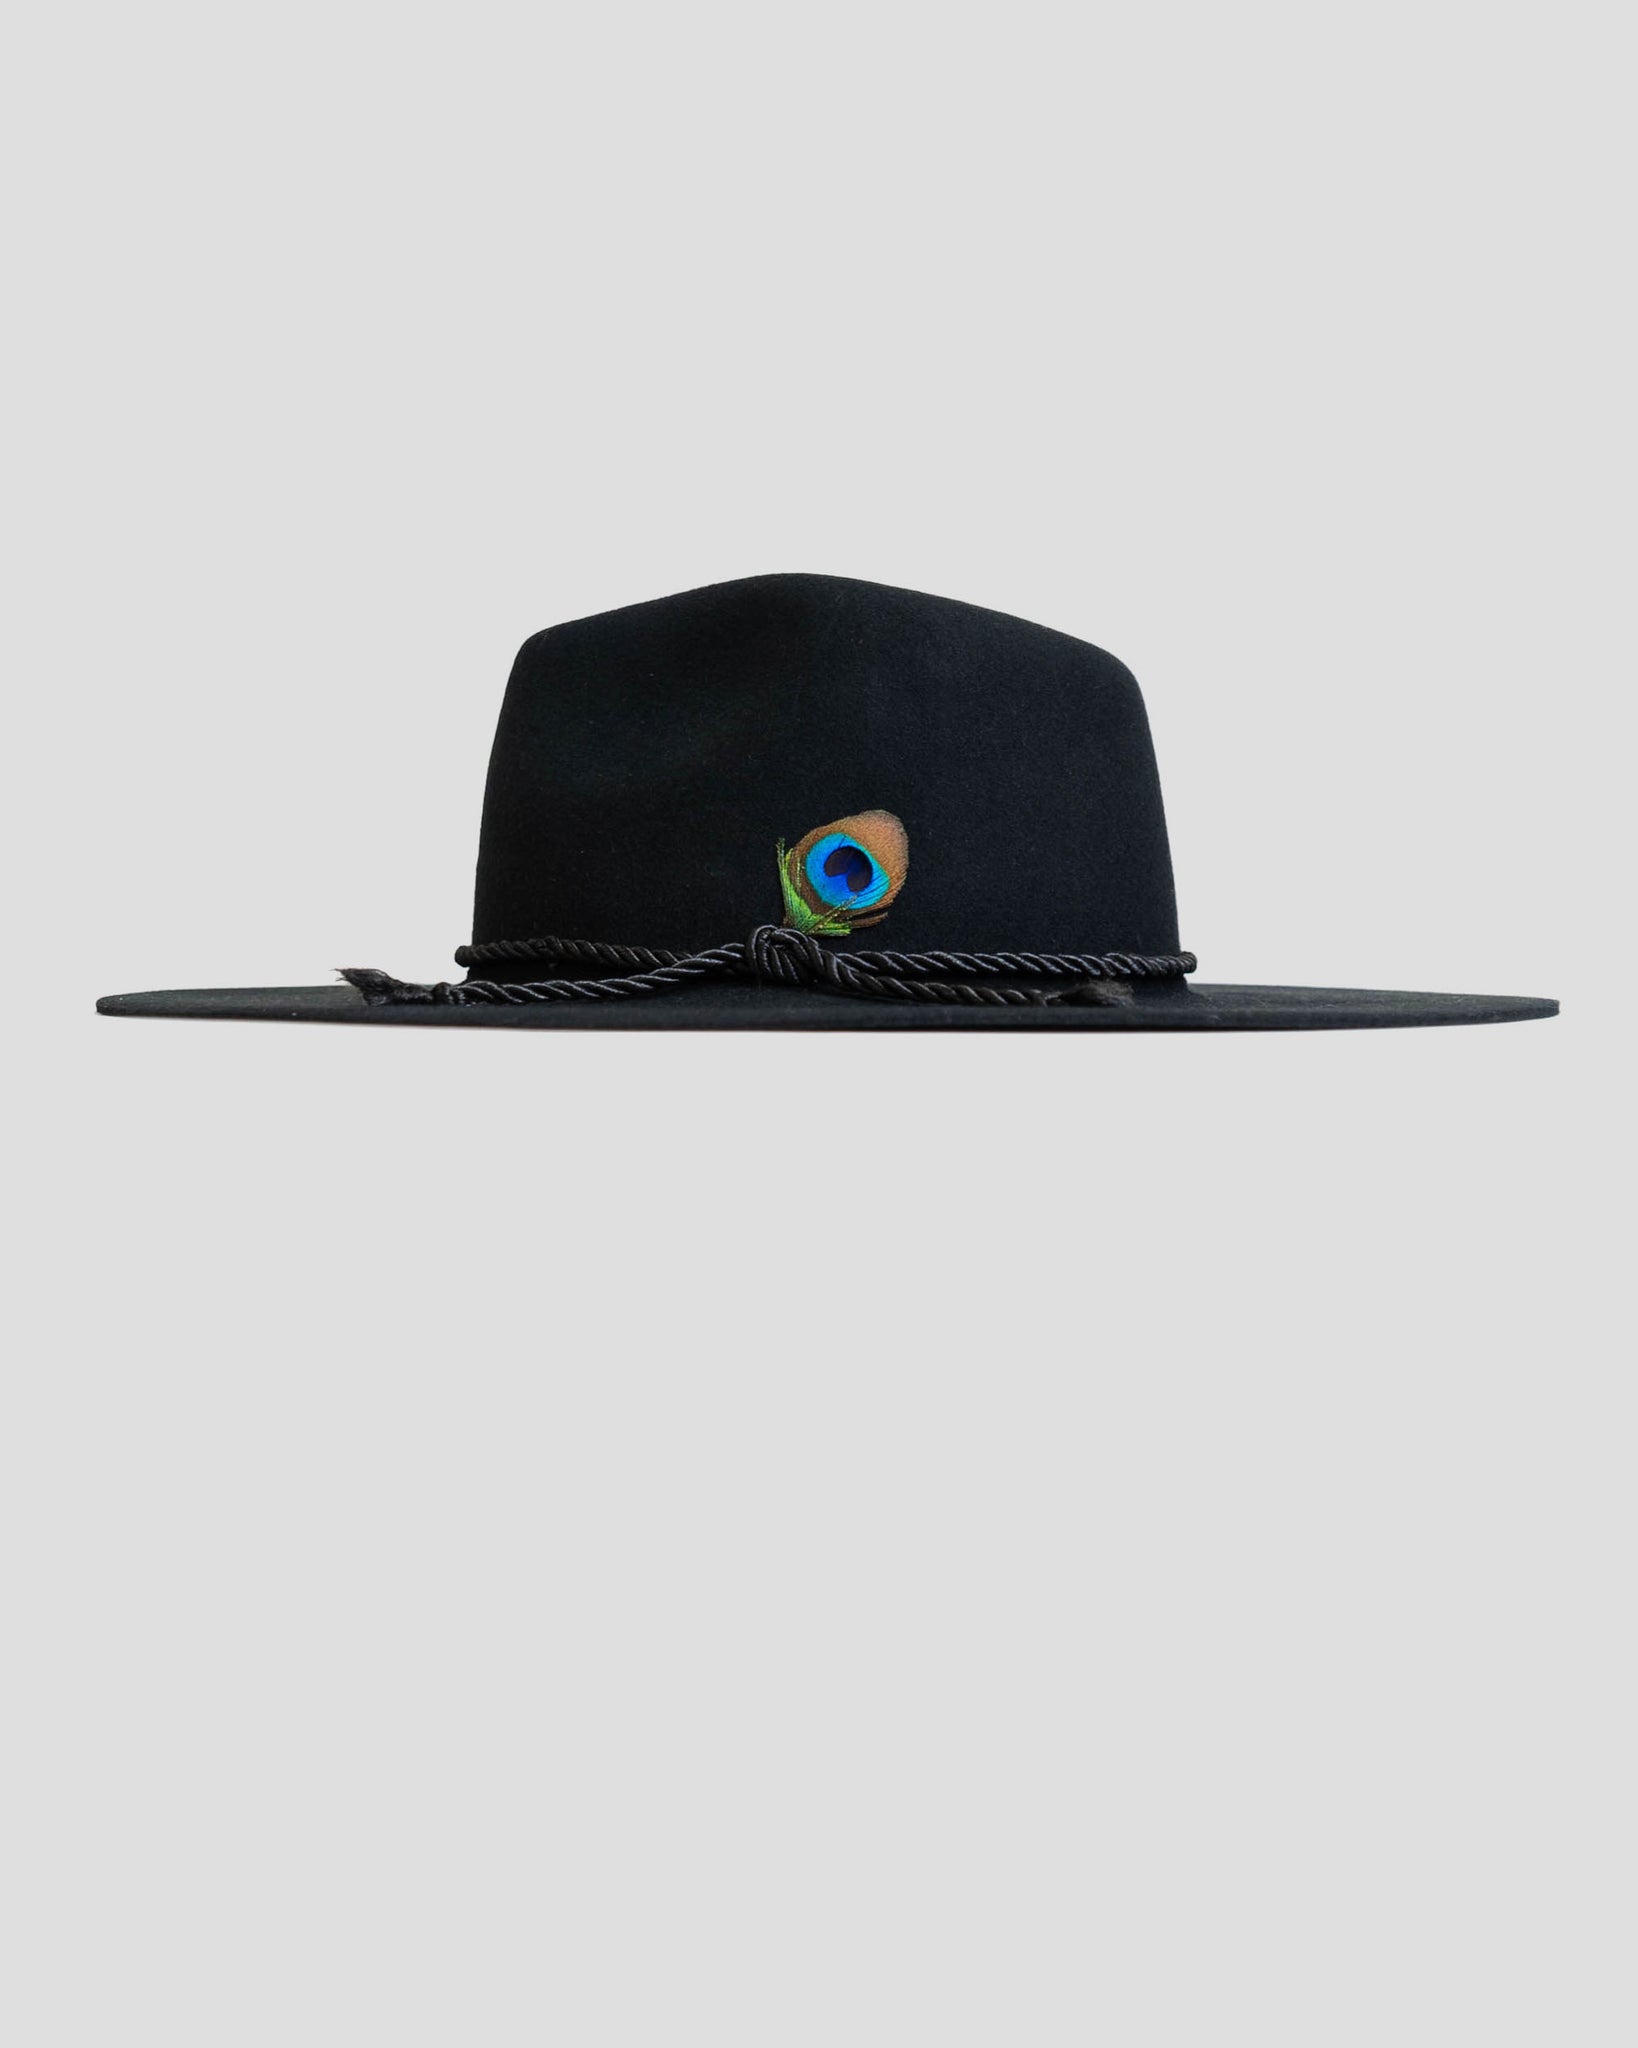 Black Sunhat, Giant Brim Hat, 12 Inch Brim Straw Hat, Extra Wide Brim Hat,  Summer Hat for Women, Giant Sunhat, Gift for Women -  Canada